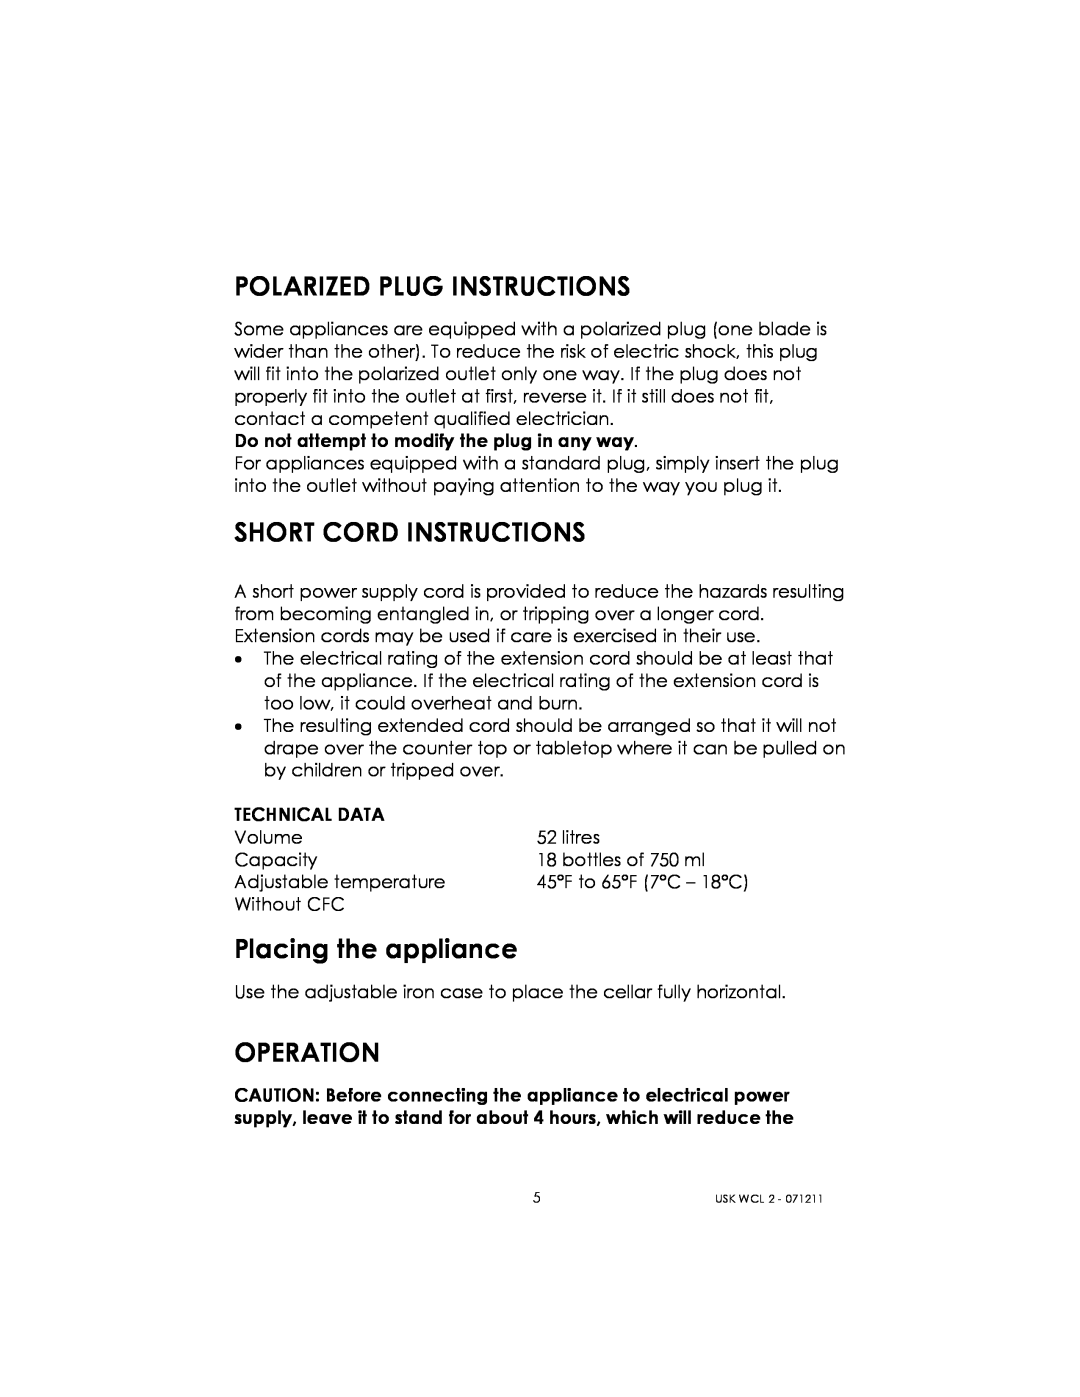 Kalorik USK WCL 2 manual Polarized Plug Instructions, Short Cord Instructions, Placing the appliance, Operation 